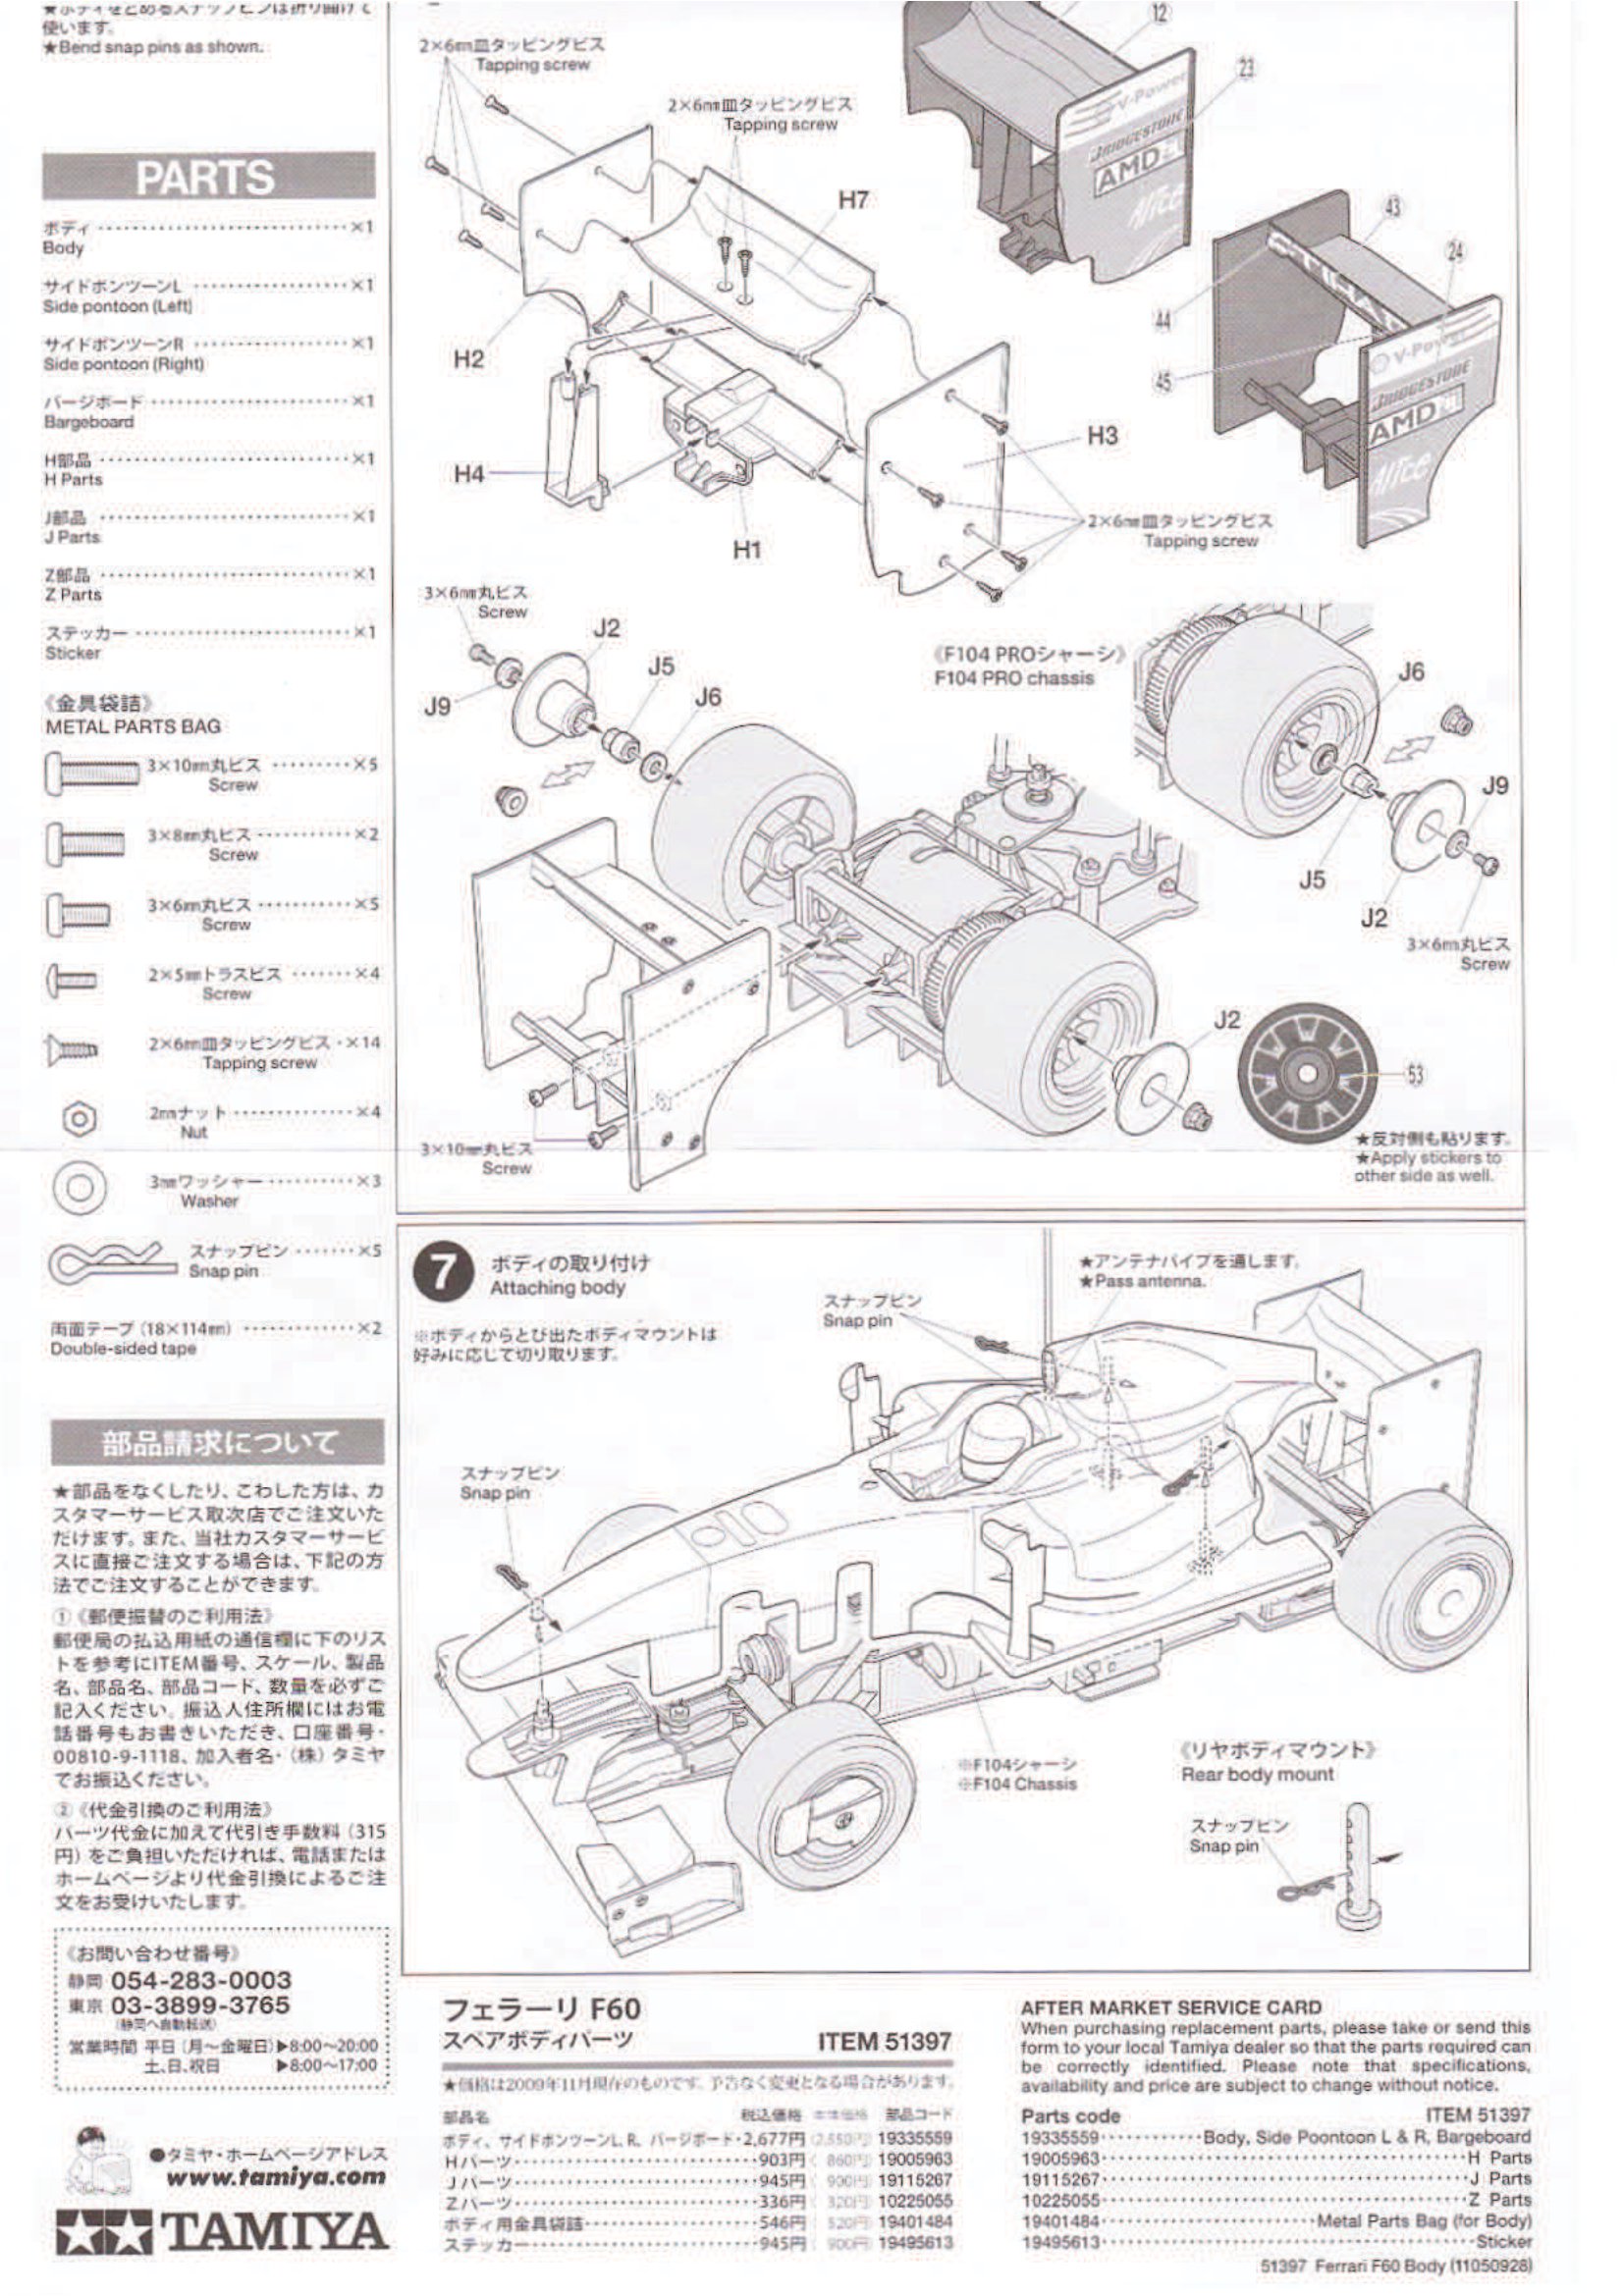 Tamiya - Ferrari F60 - F104 Chassis - Body Manual - Page 4